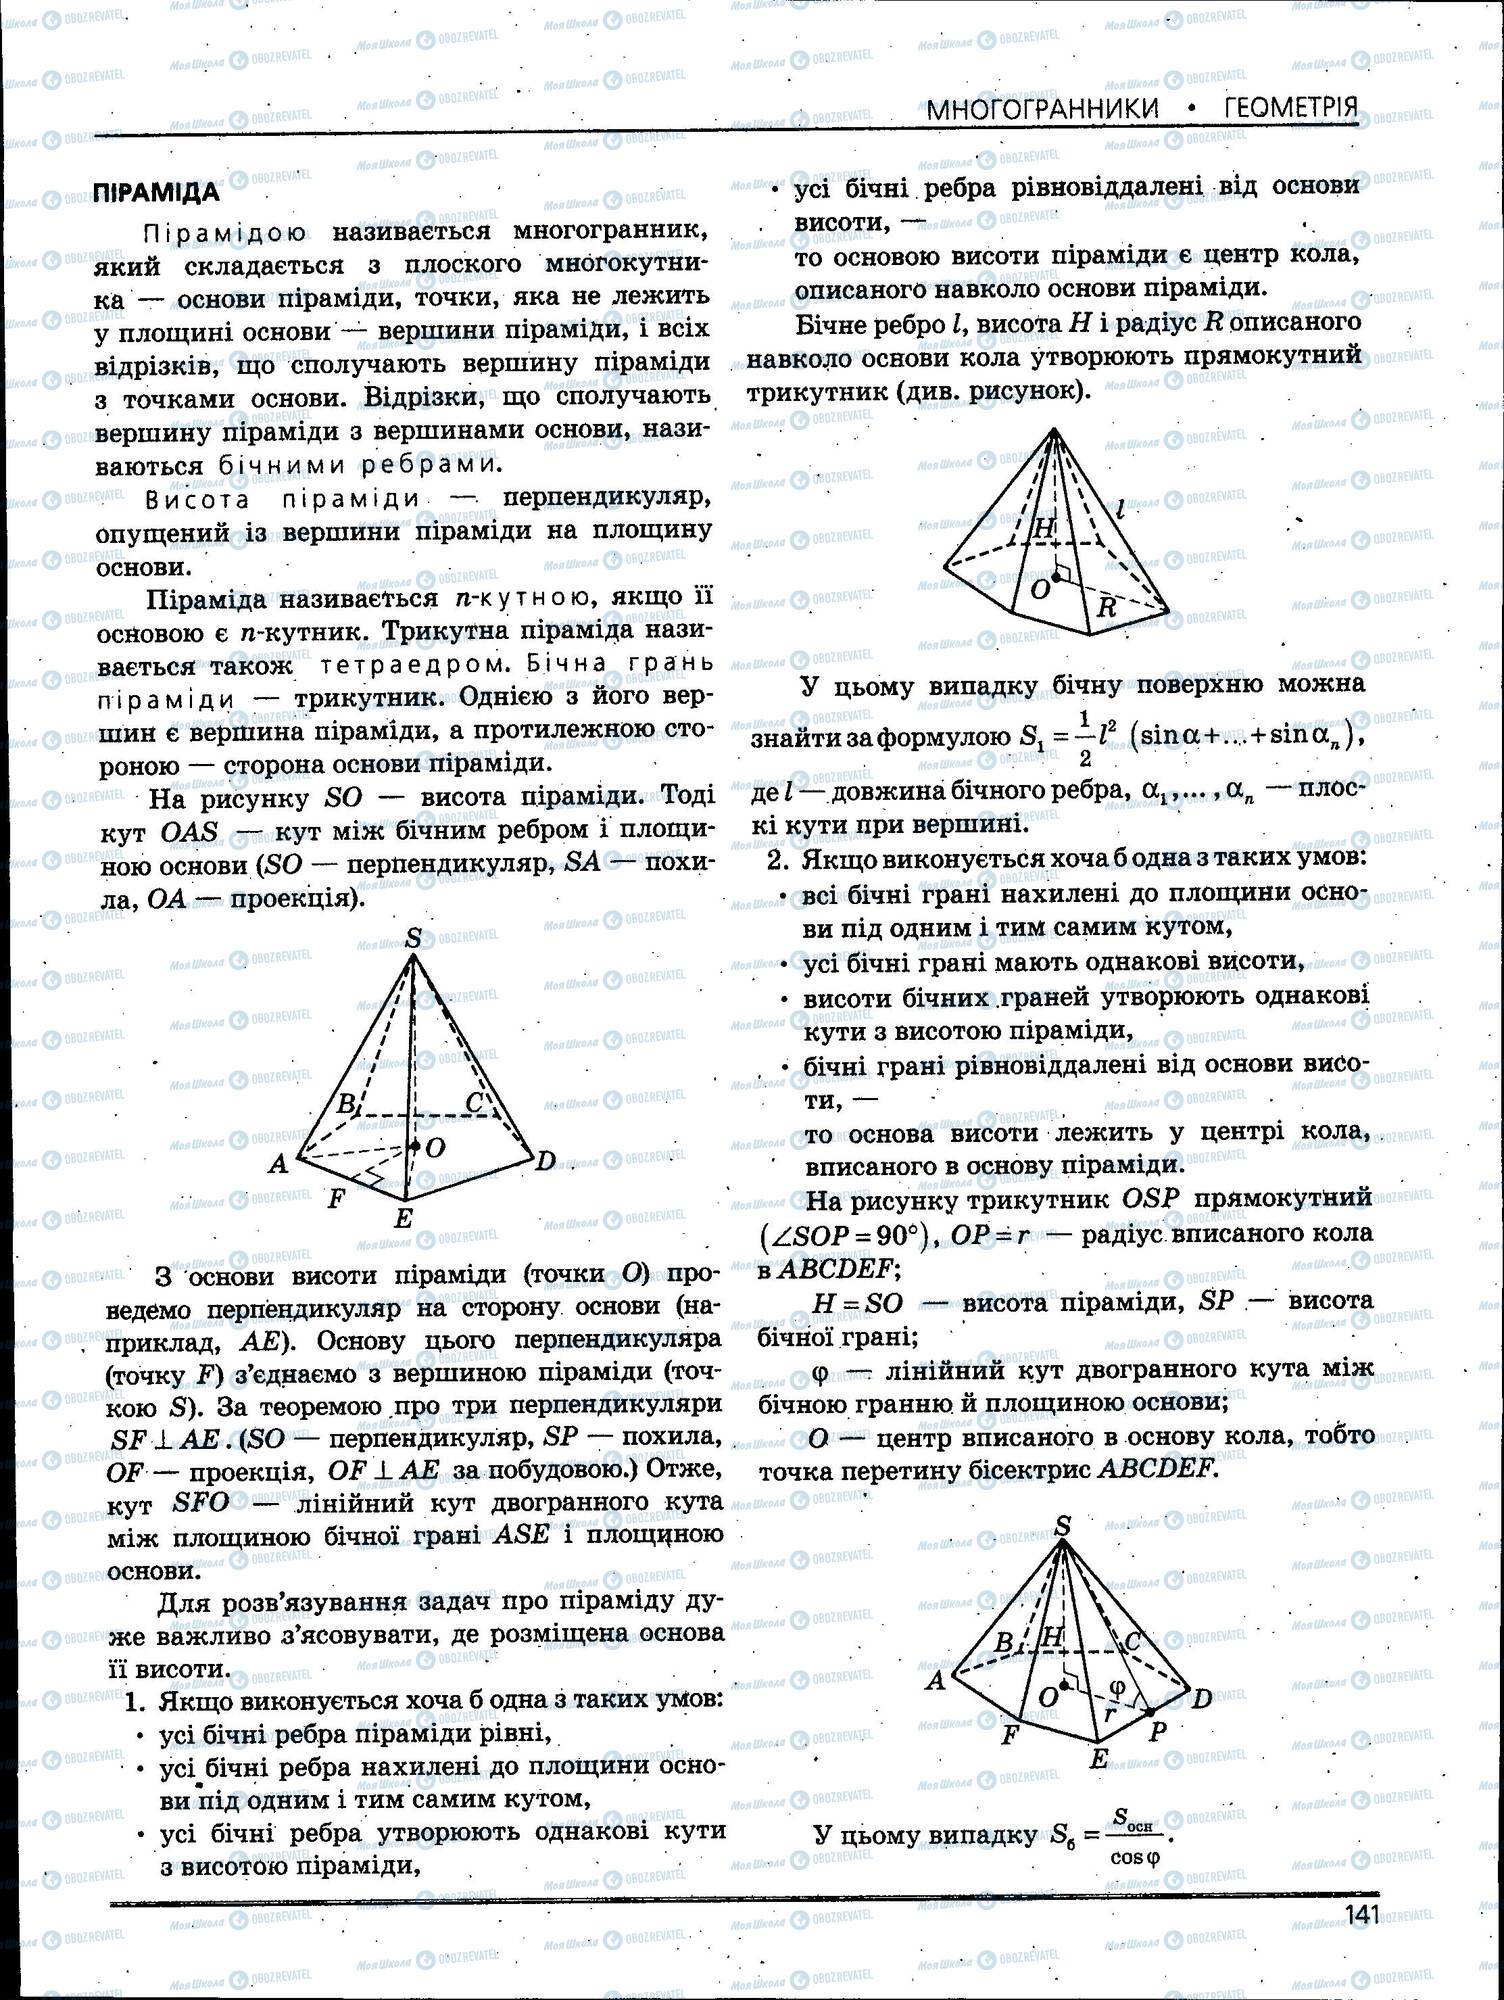 ЗНО Математика 11 класс страница 141